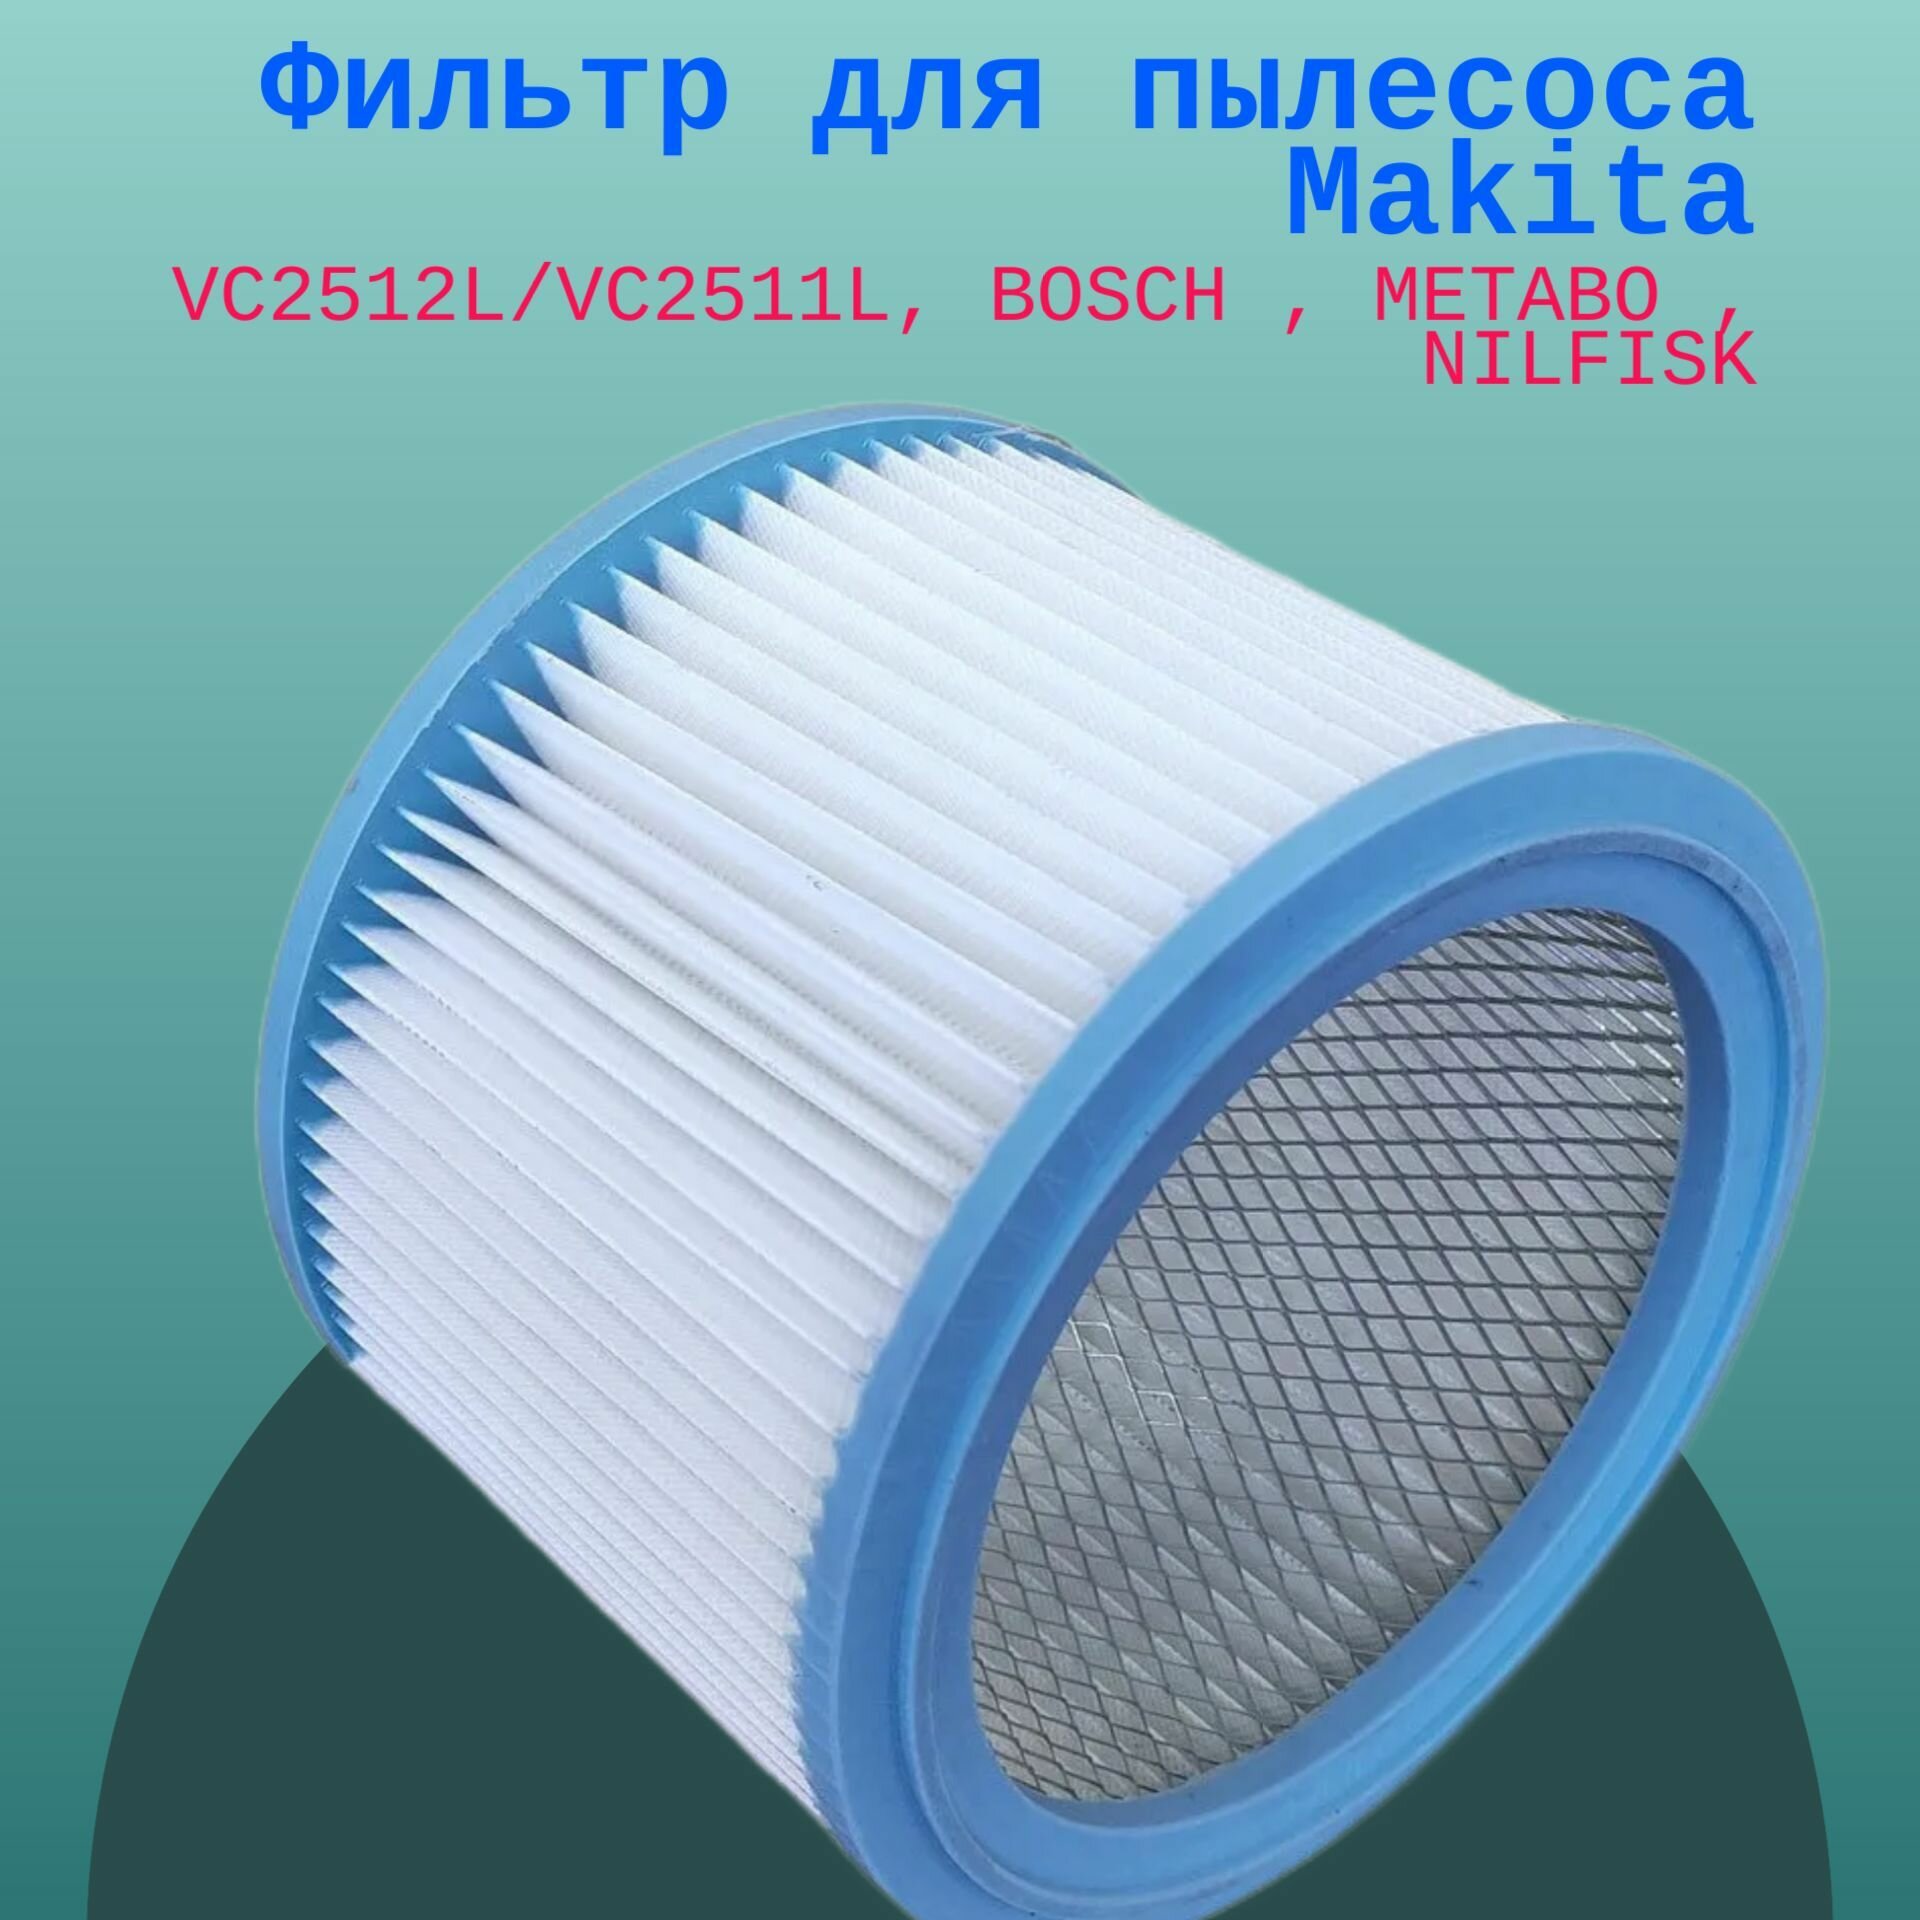 Фильтр для пылесоса Makita VC2512L/VC2511L BOSCH  METABO  NILFISK